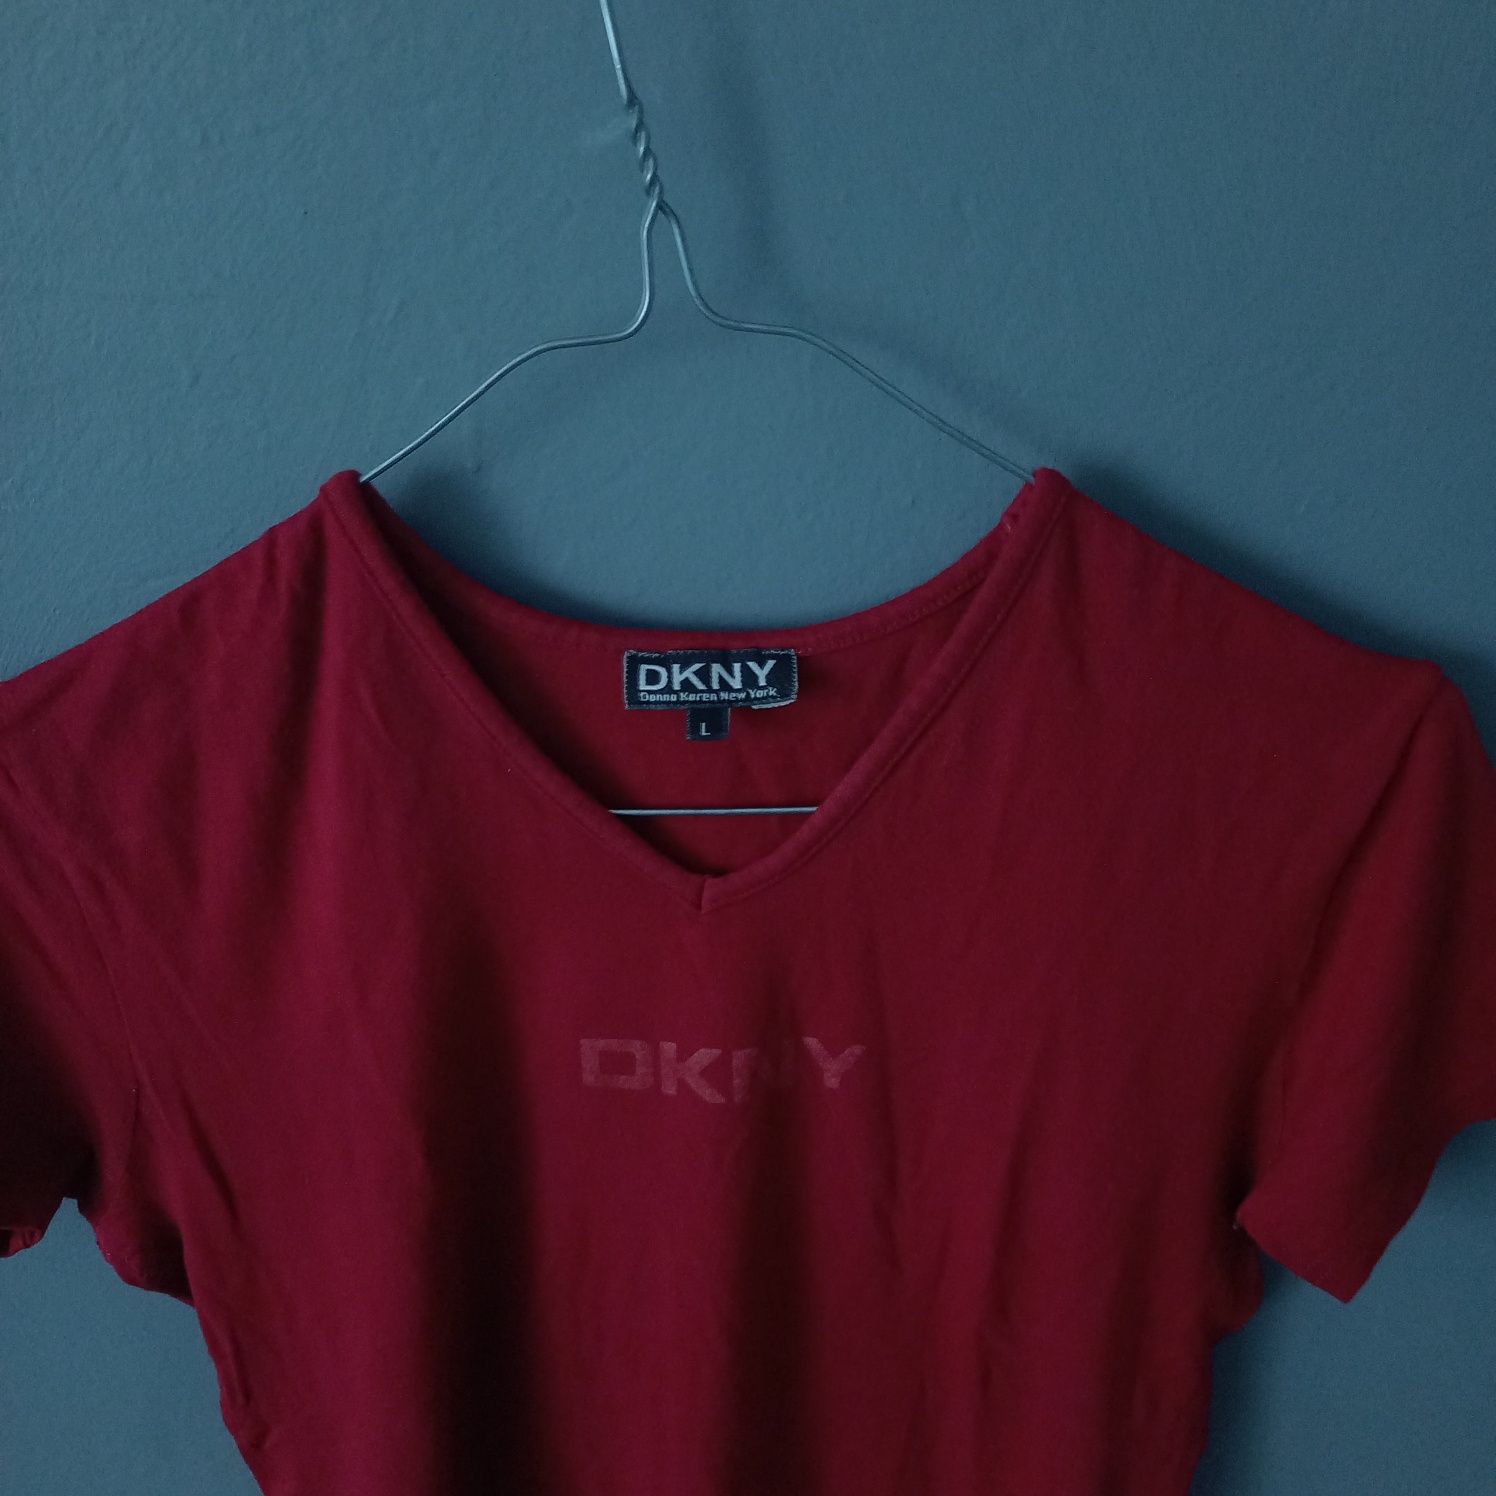 DKNY czerwona krwista koszulka top mega
L